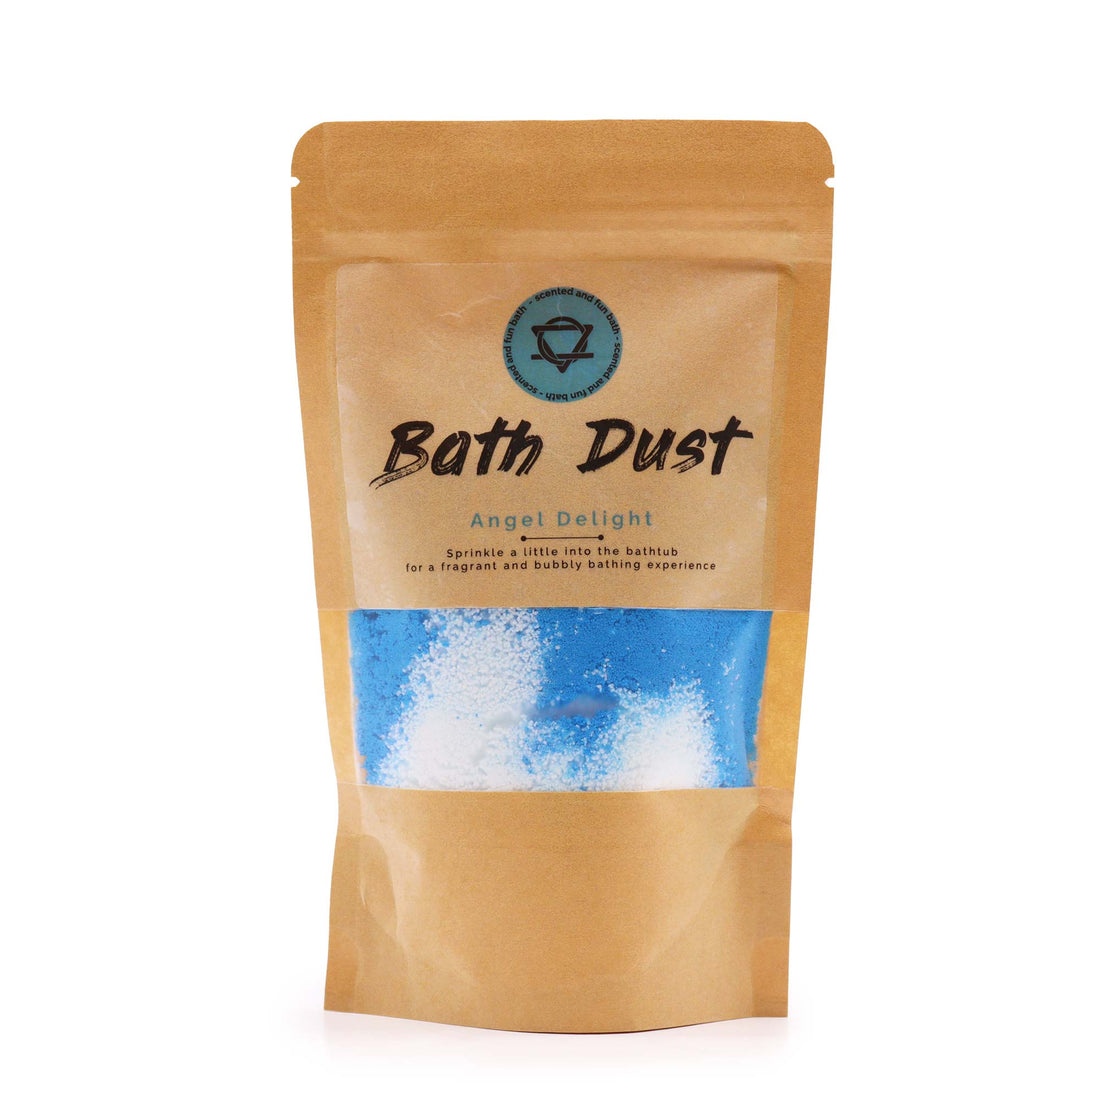 Angel Delight Bath Dust